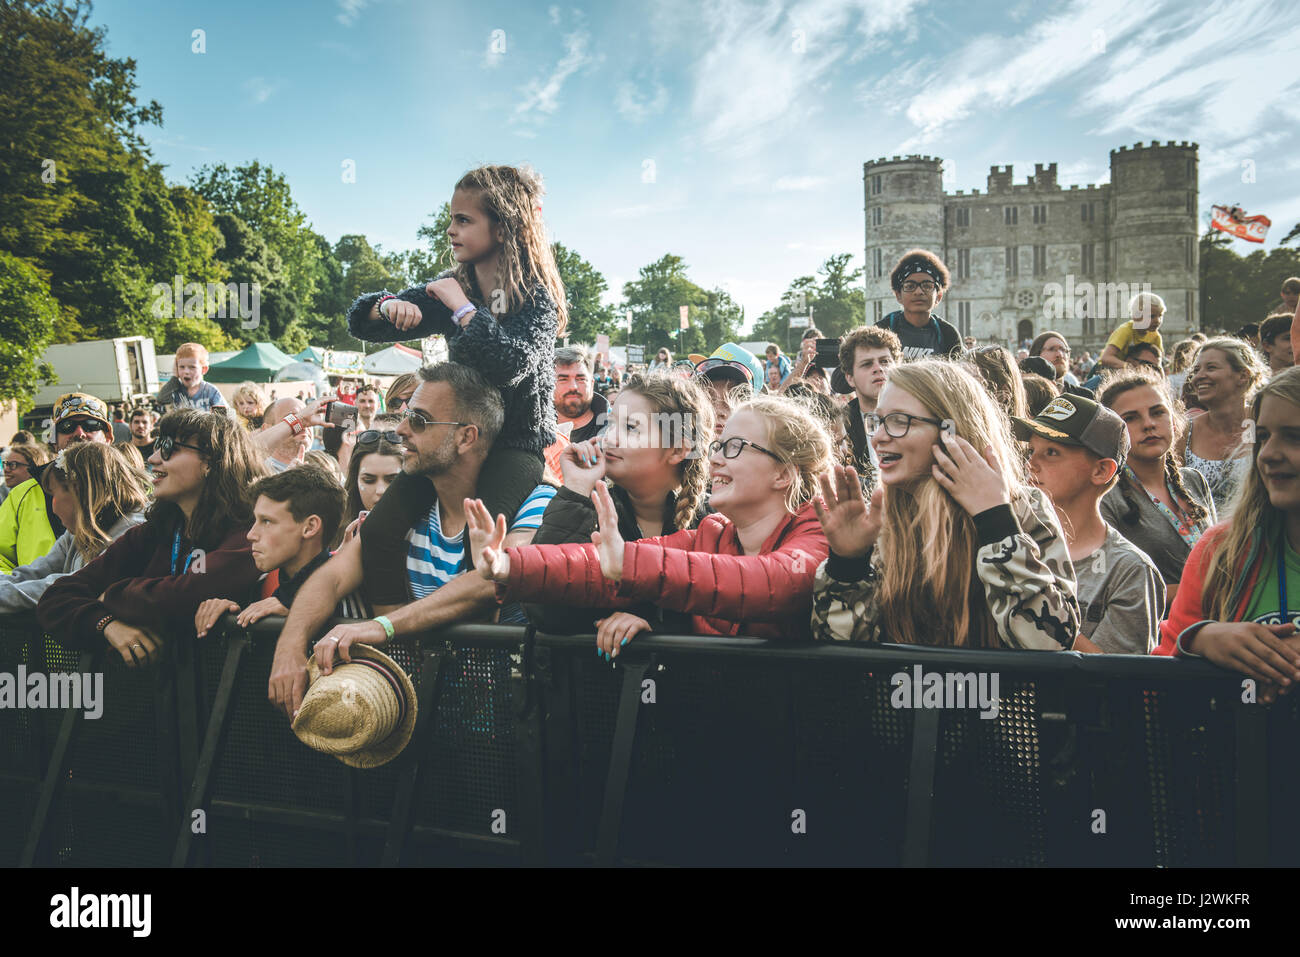 Lulworth Castle, Lulworth Estate, East Lulworth, Dorset, United Kingdom. 29 July 2016. The crowd at Camp Bestival Music Festival 2016. © Will Bailey / Alamy Stock Photo